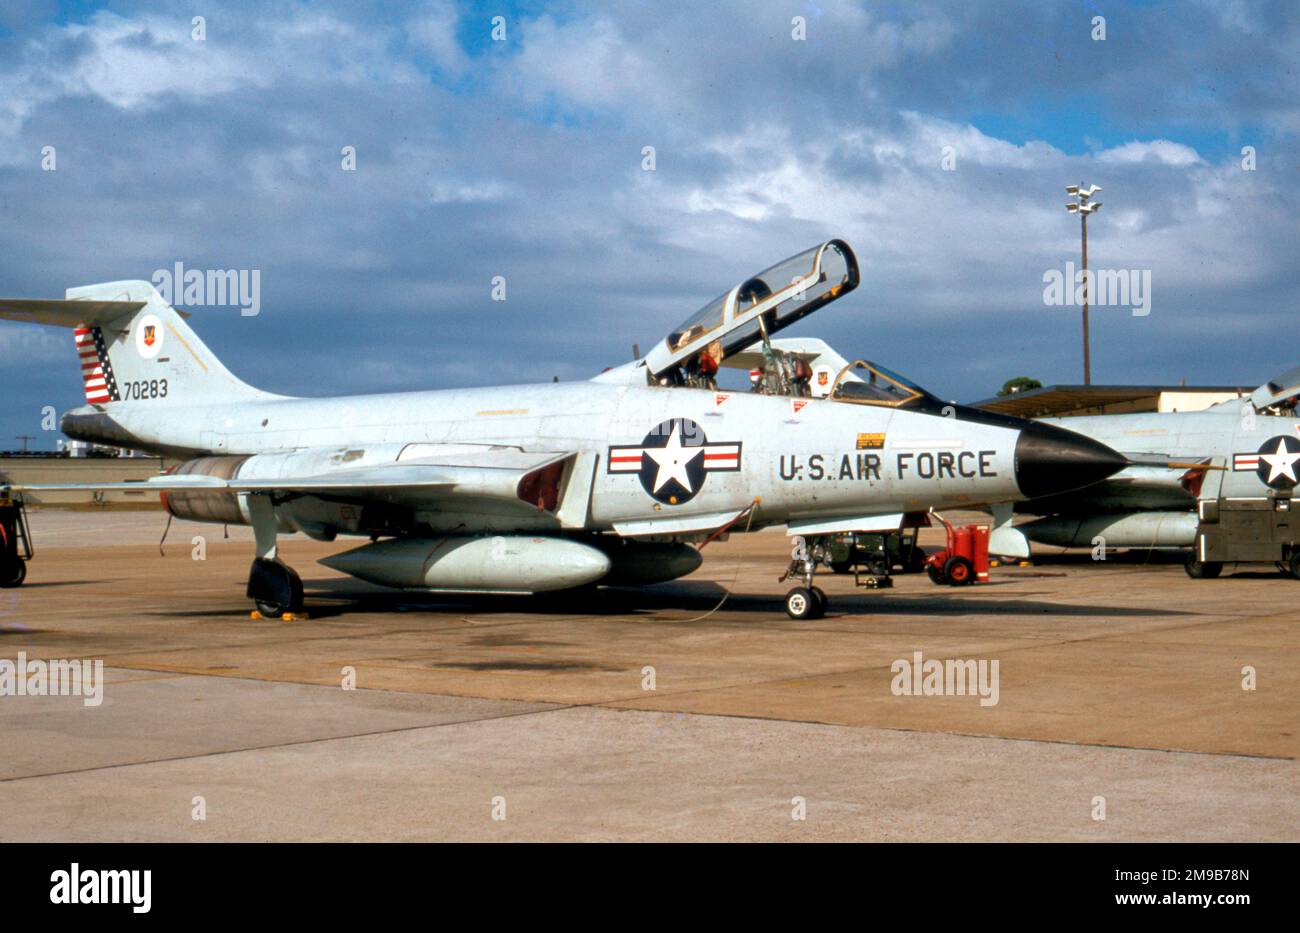 United States Air Force (USAF) - McDonnell F-101F-86-MC Voodoo 57-0283 (msn461). Stockfoto